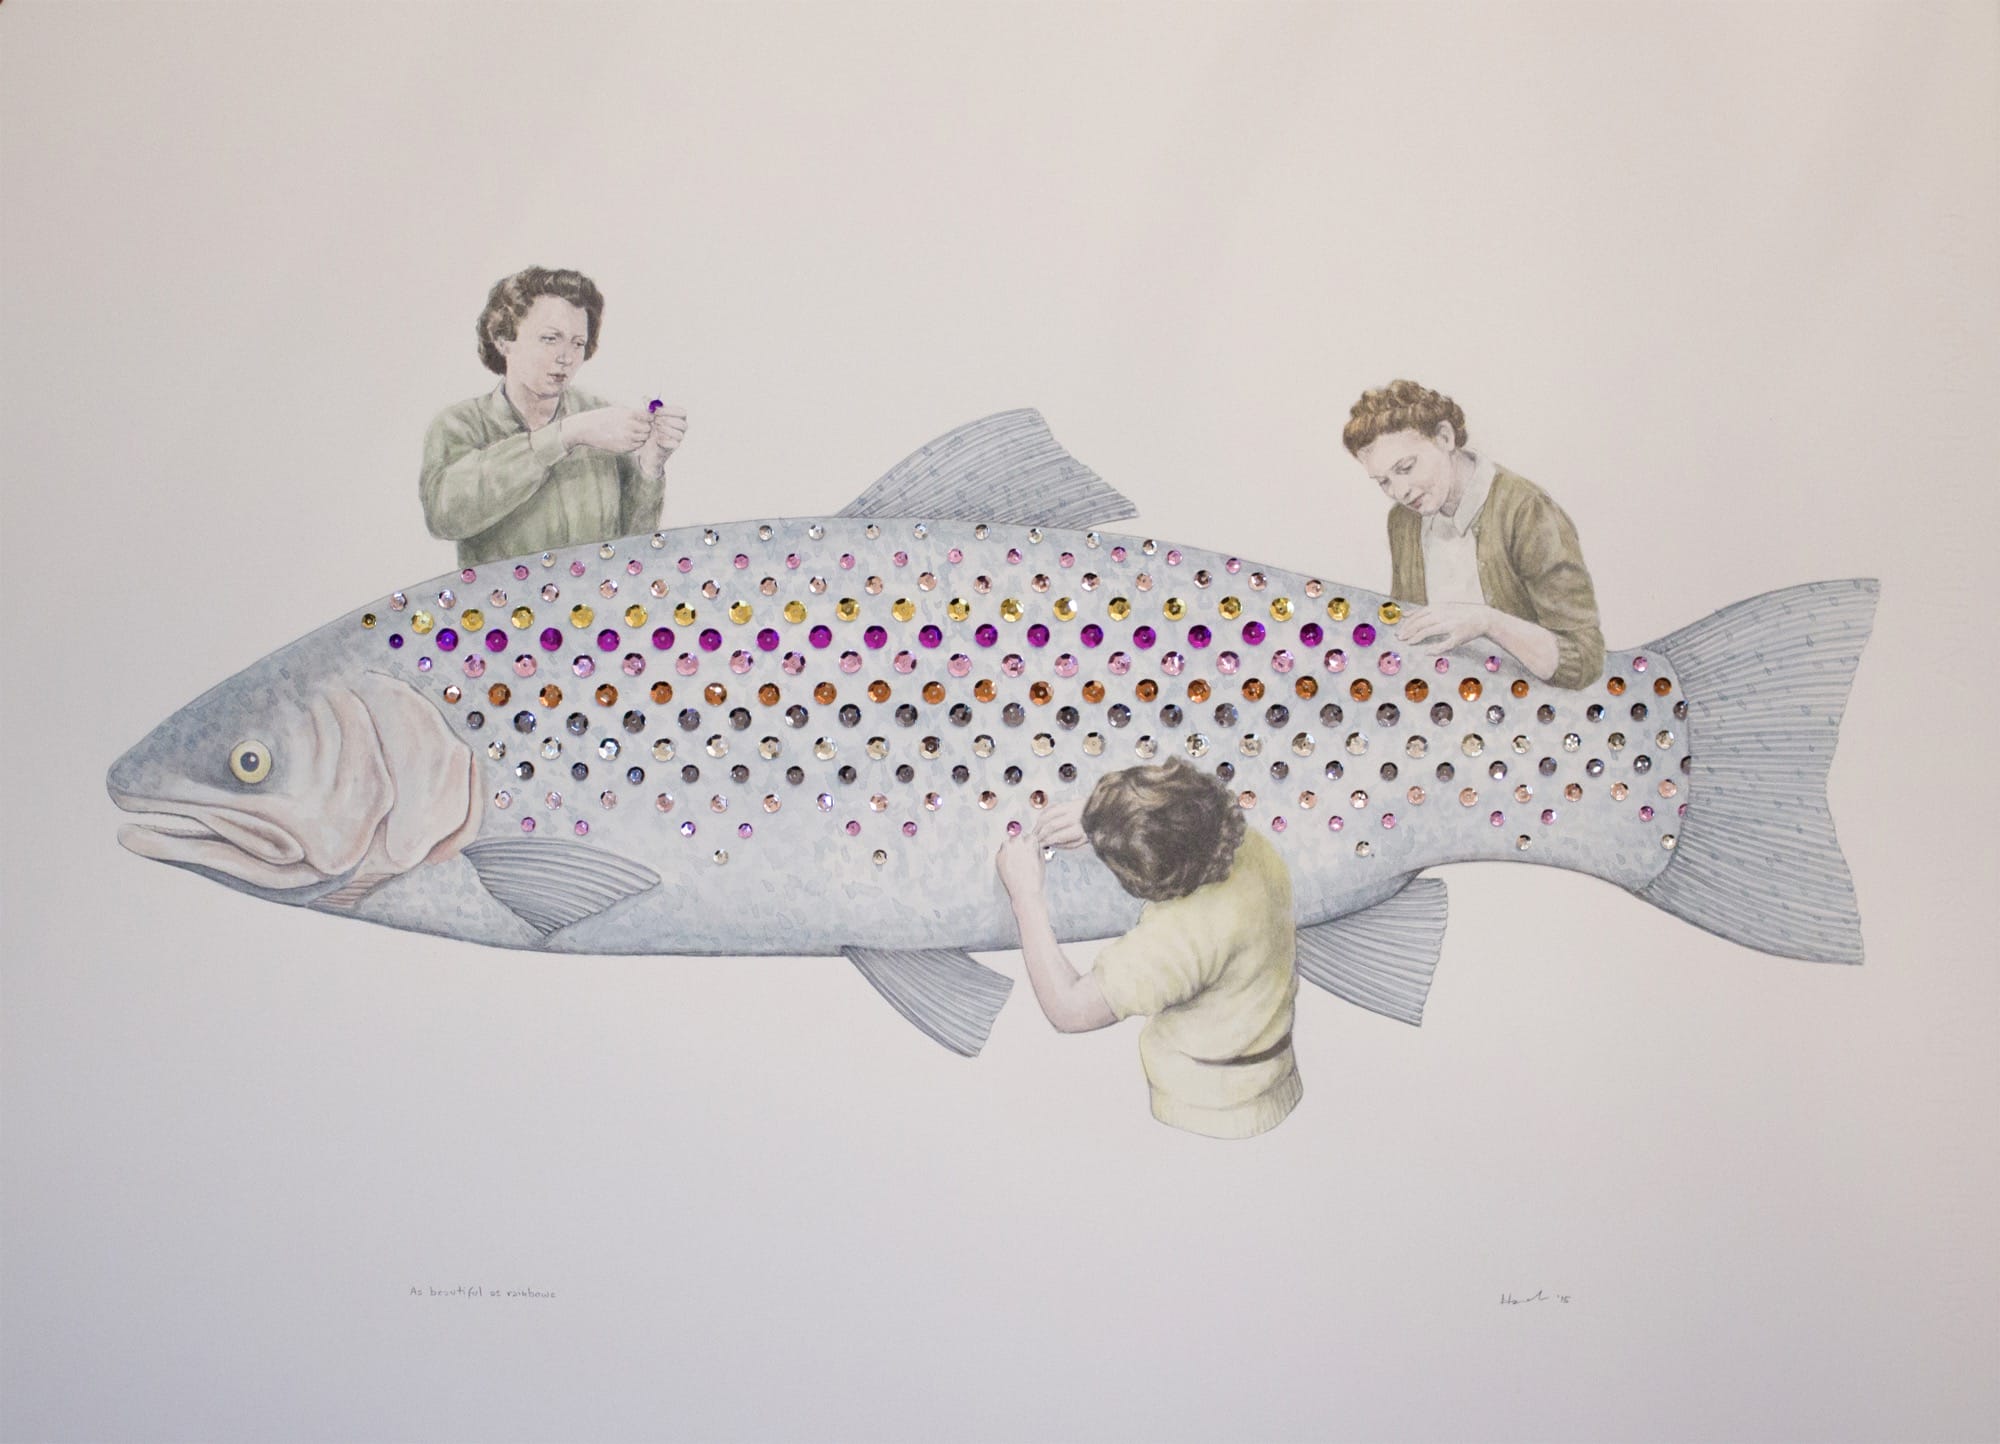 three women stitch colorful sequins onto a massive fish